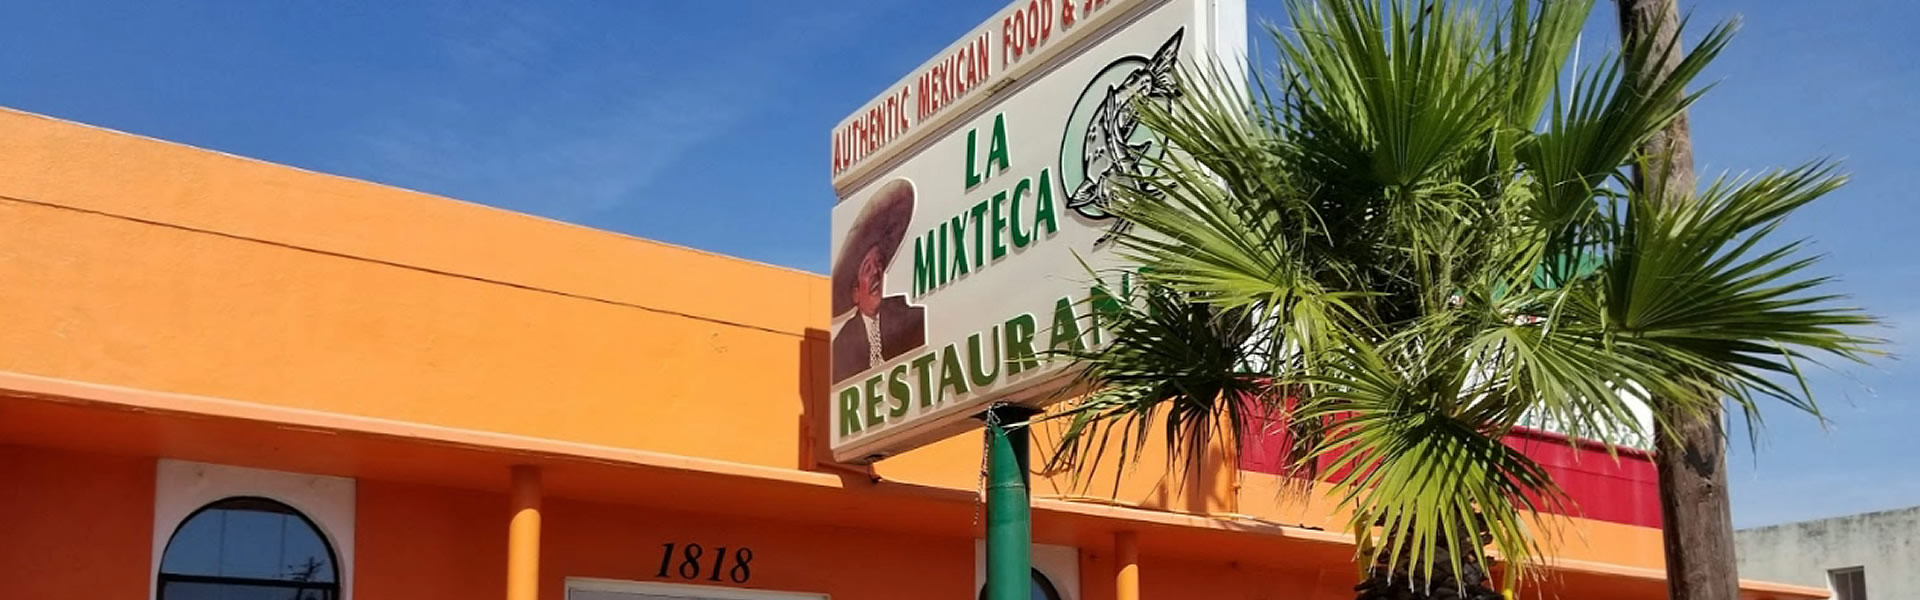 La Mixteca Mexican Seafood Restaurant, Galveston TX